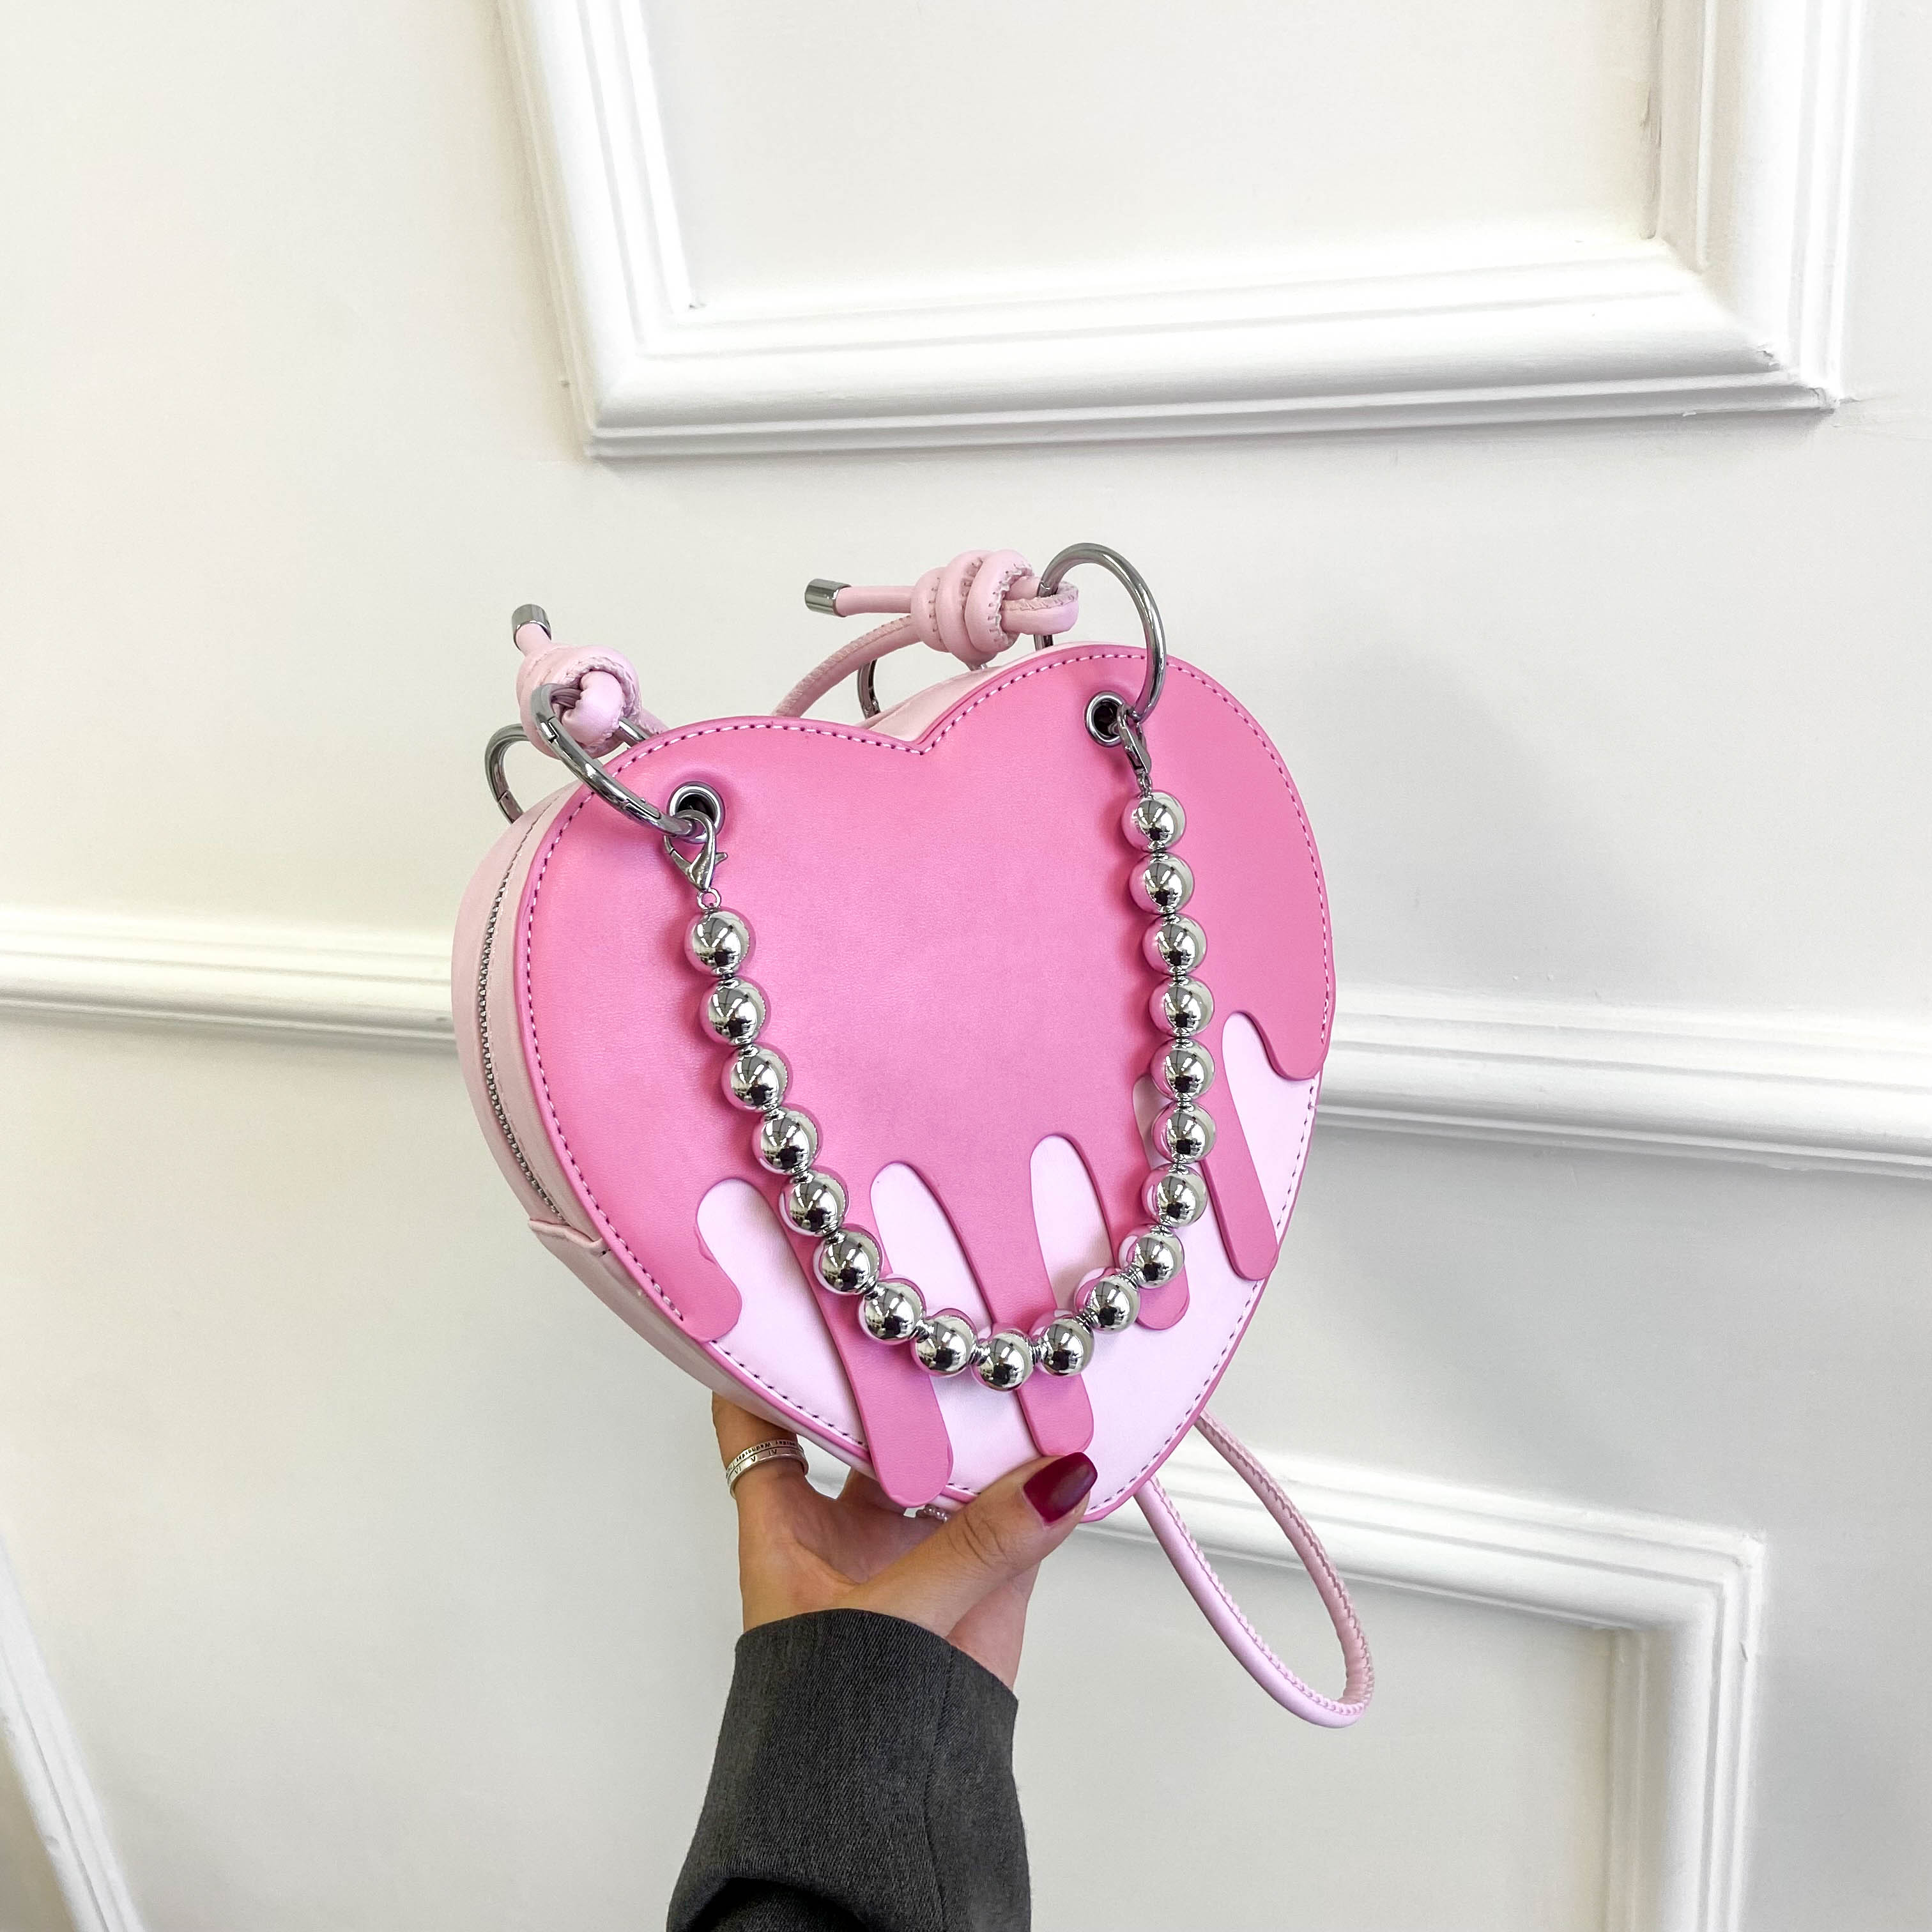 Pink heart shaped bag